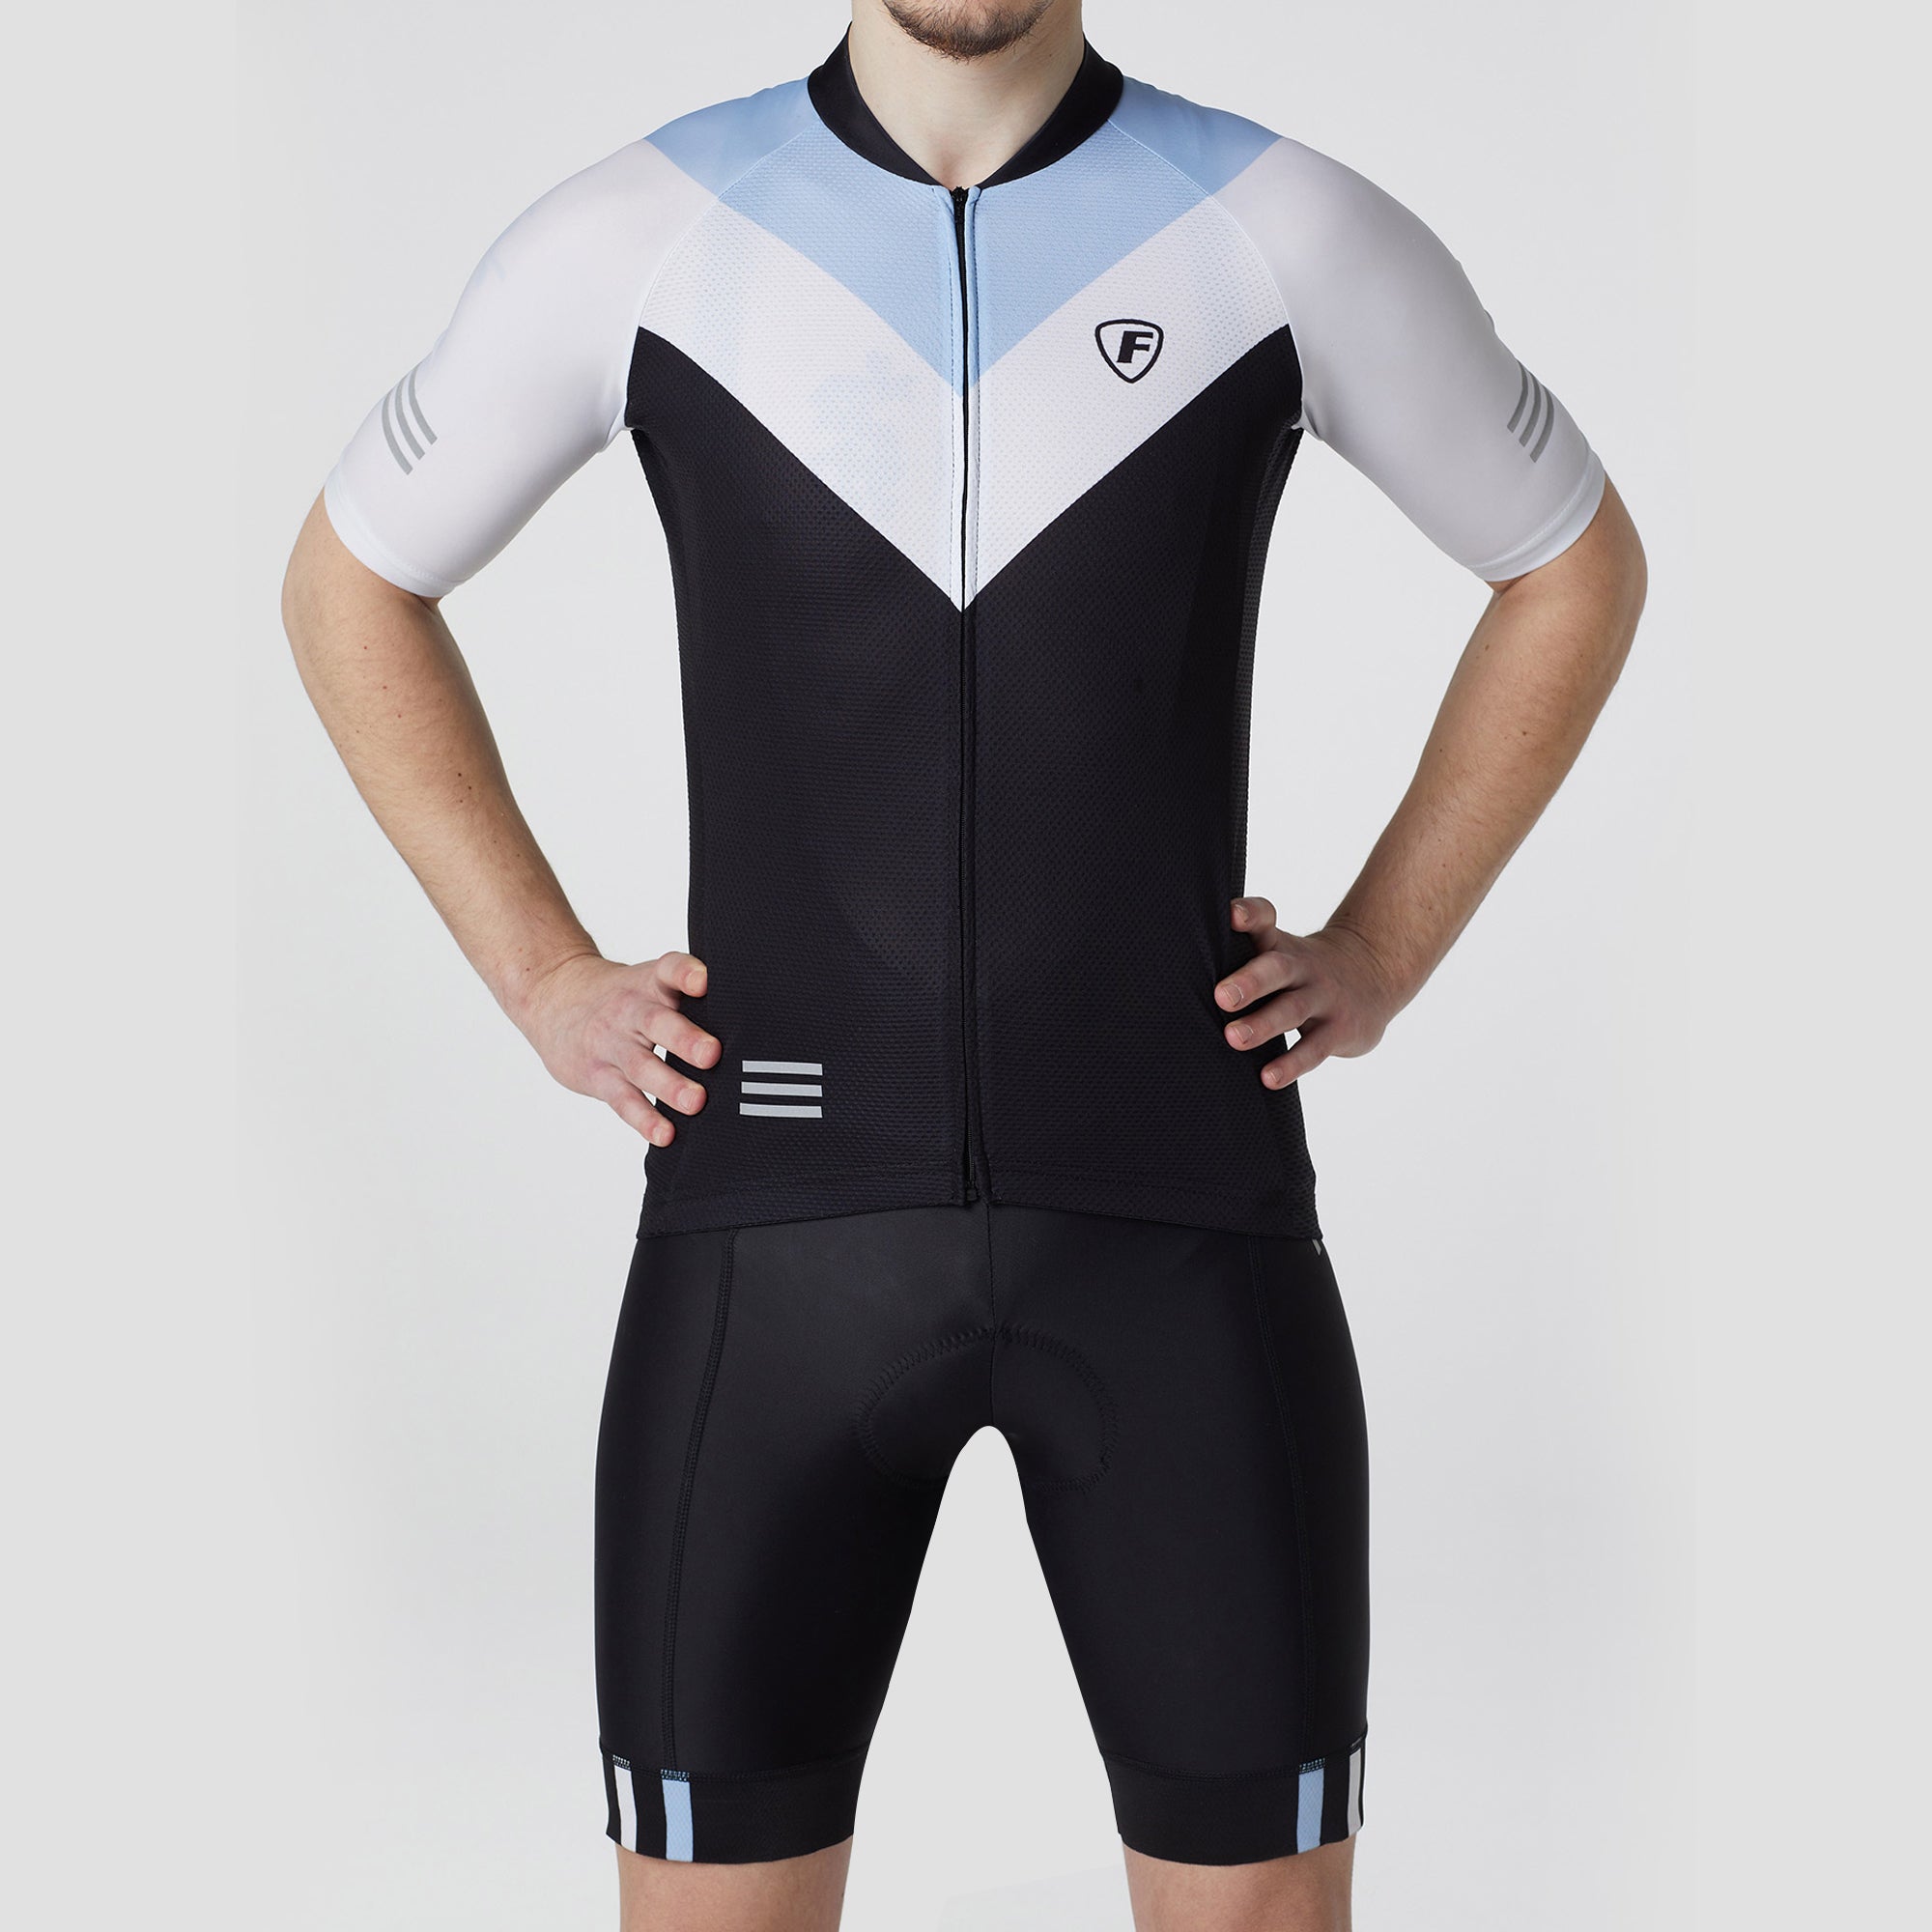 Fdx Mens Blue & Black Short Sleeve Cycling Jersey & Gel Padded Bib Shorts Best Summer Road Bike Wear Light Weight, Hi-viz Reflectors & Pockets - Velos